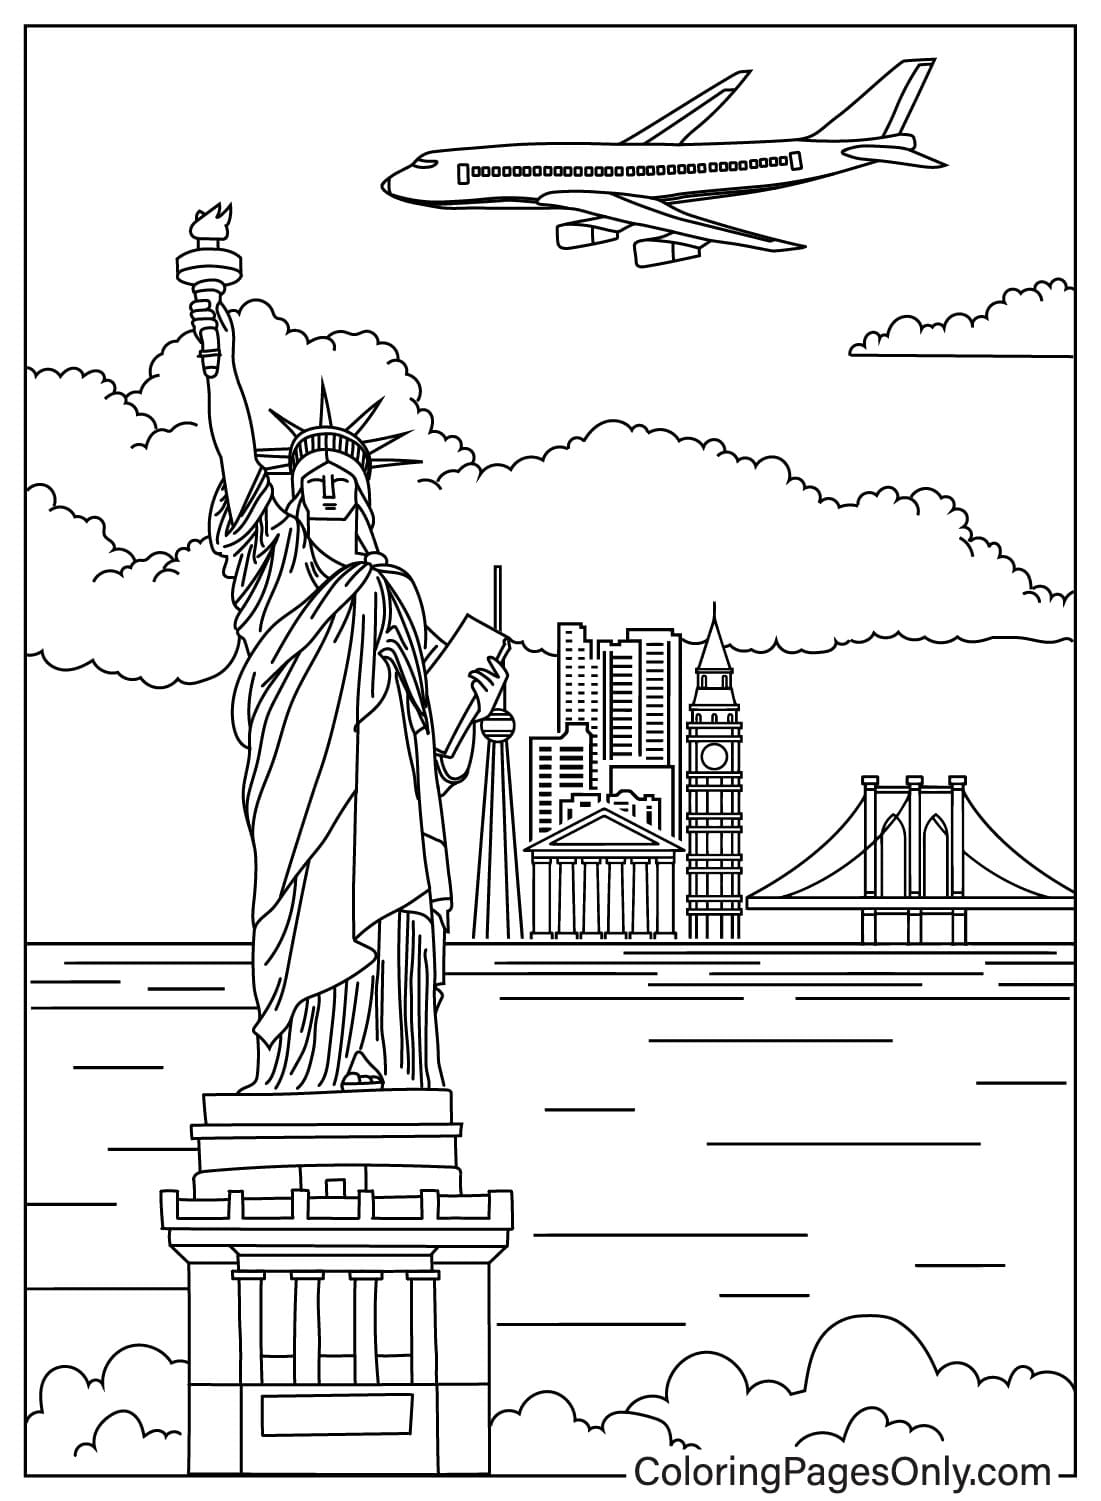 Dibujo De La Estatua De La Libertad De Nueva York Para Colorear